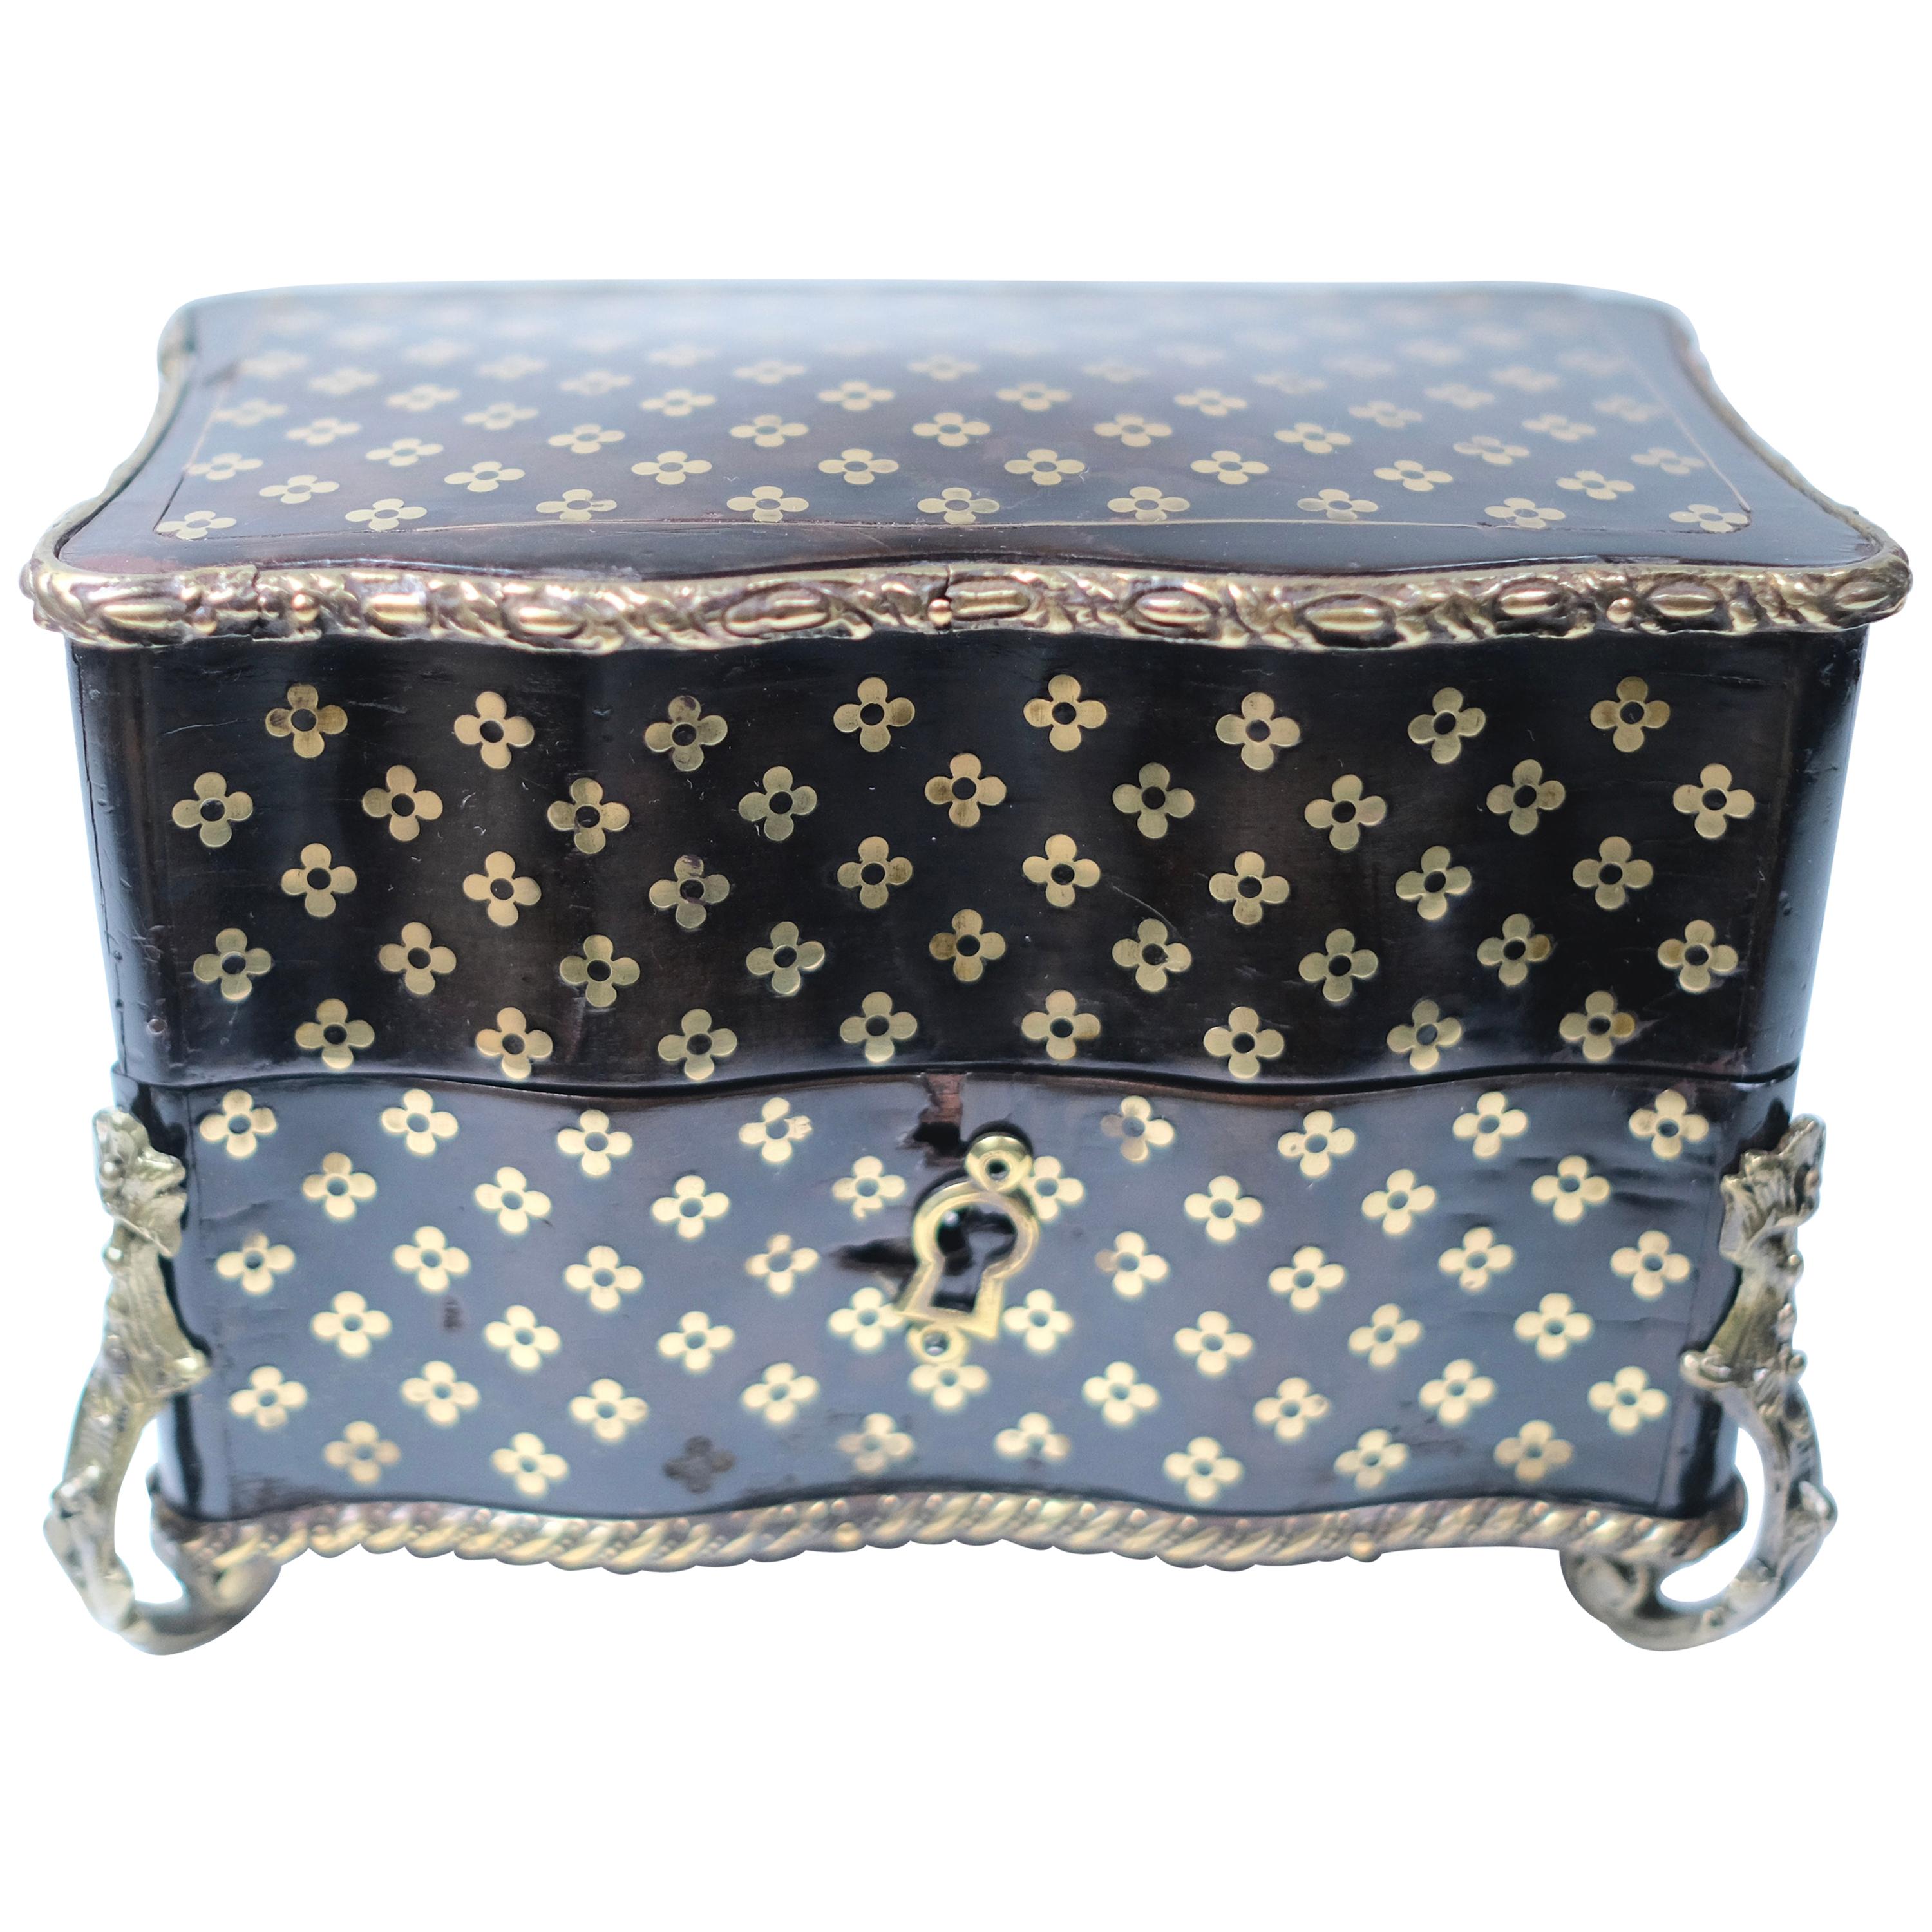 19th Century French Perfumerie Box